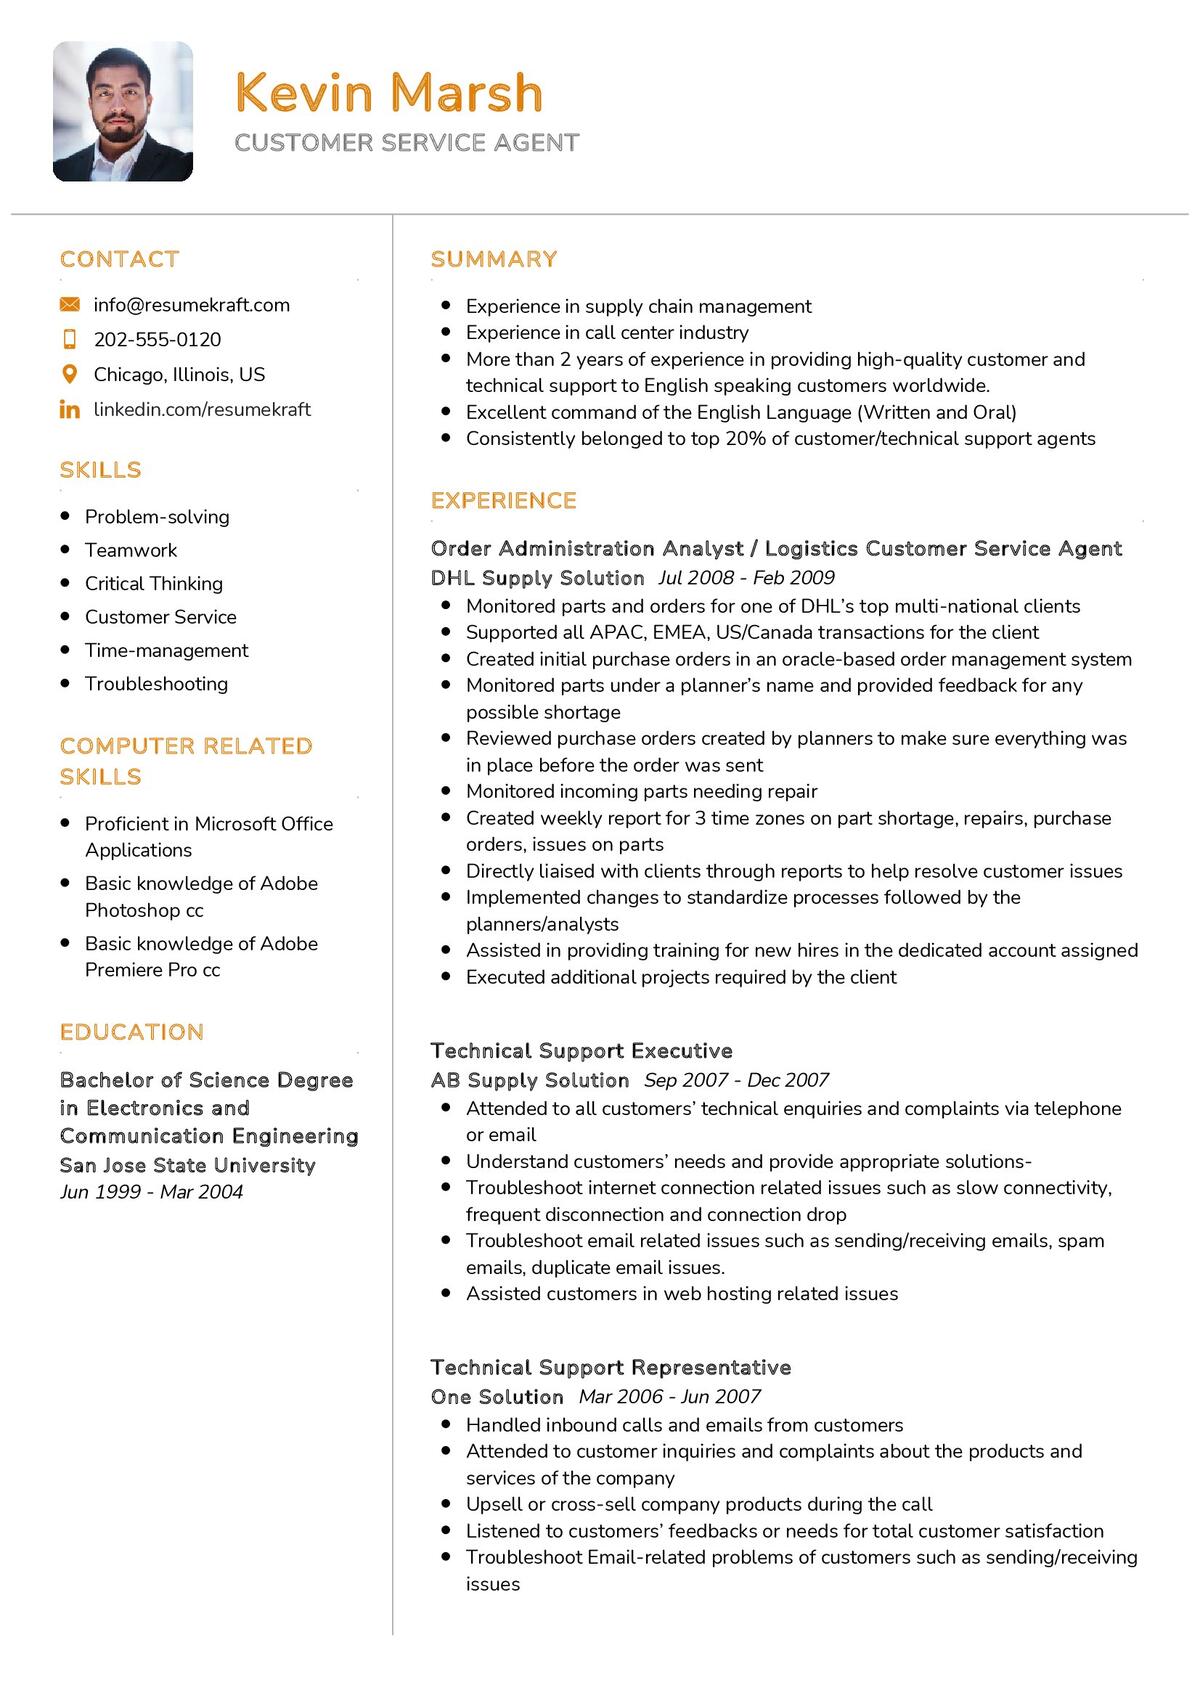 Customer Service Agent CV Sample 